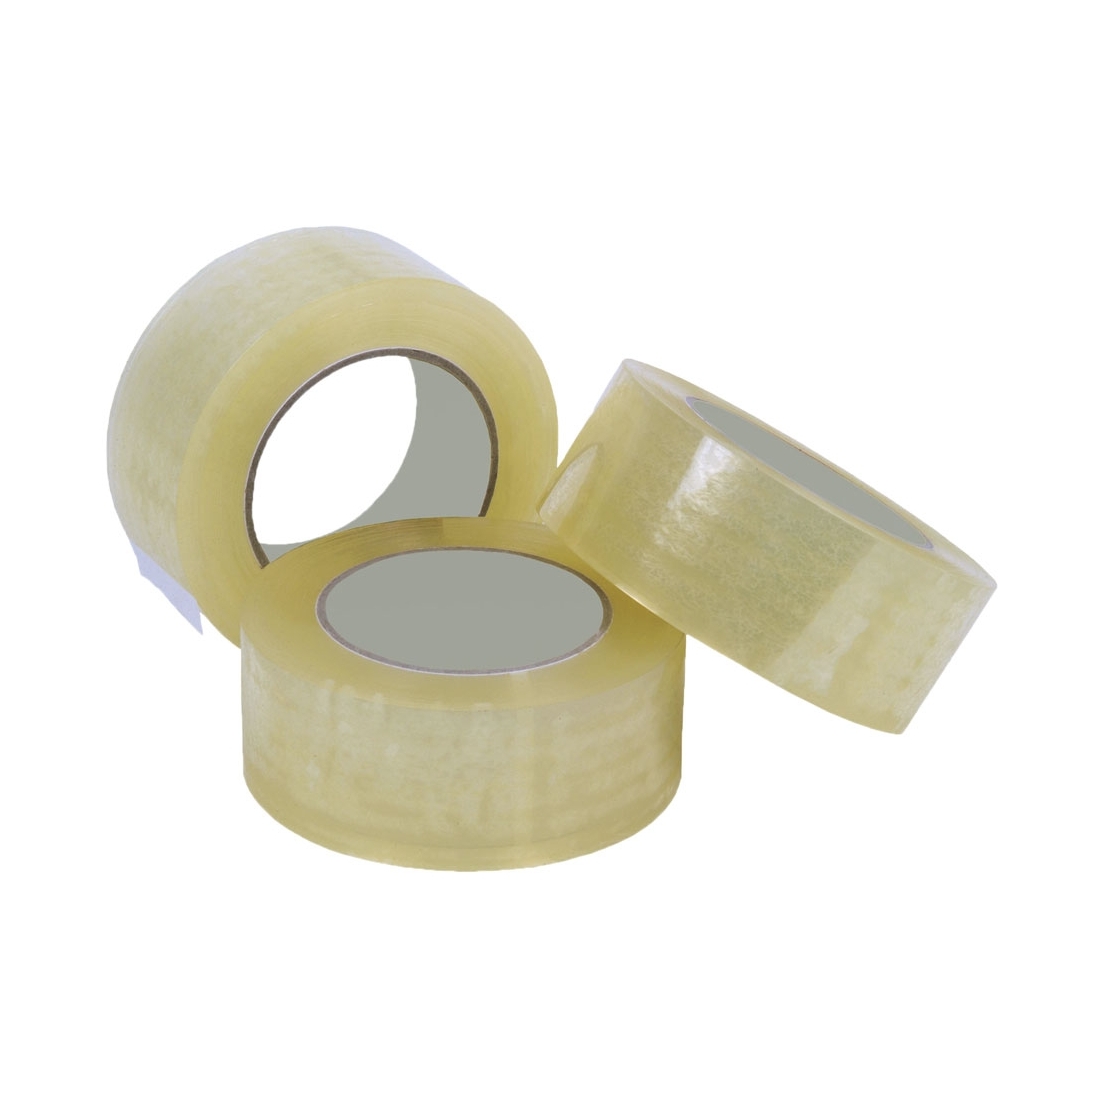 Rollos de cinta adhesiva transparente, 15mm x 25m